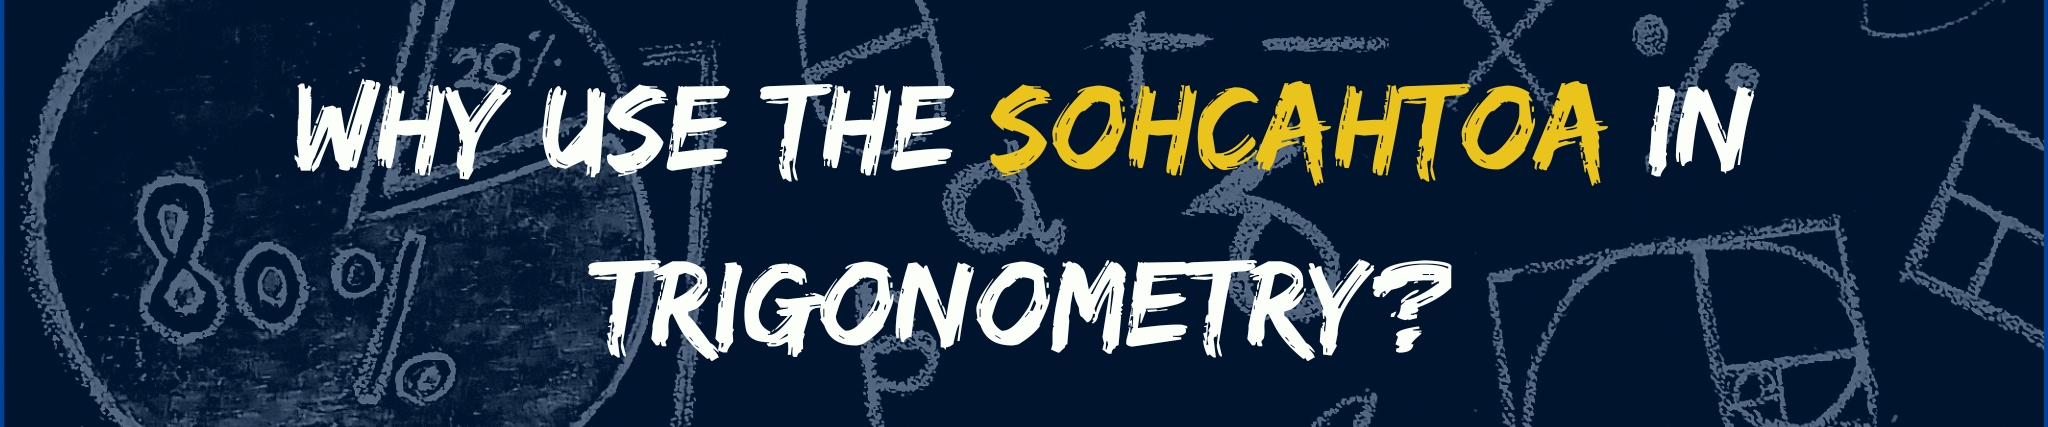 Why use the SOHCAHTOA in Trigonometry?